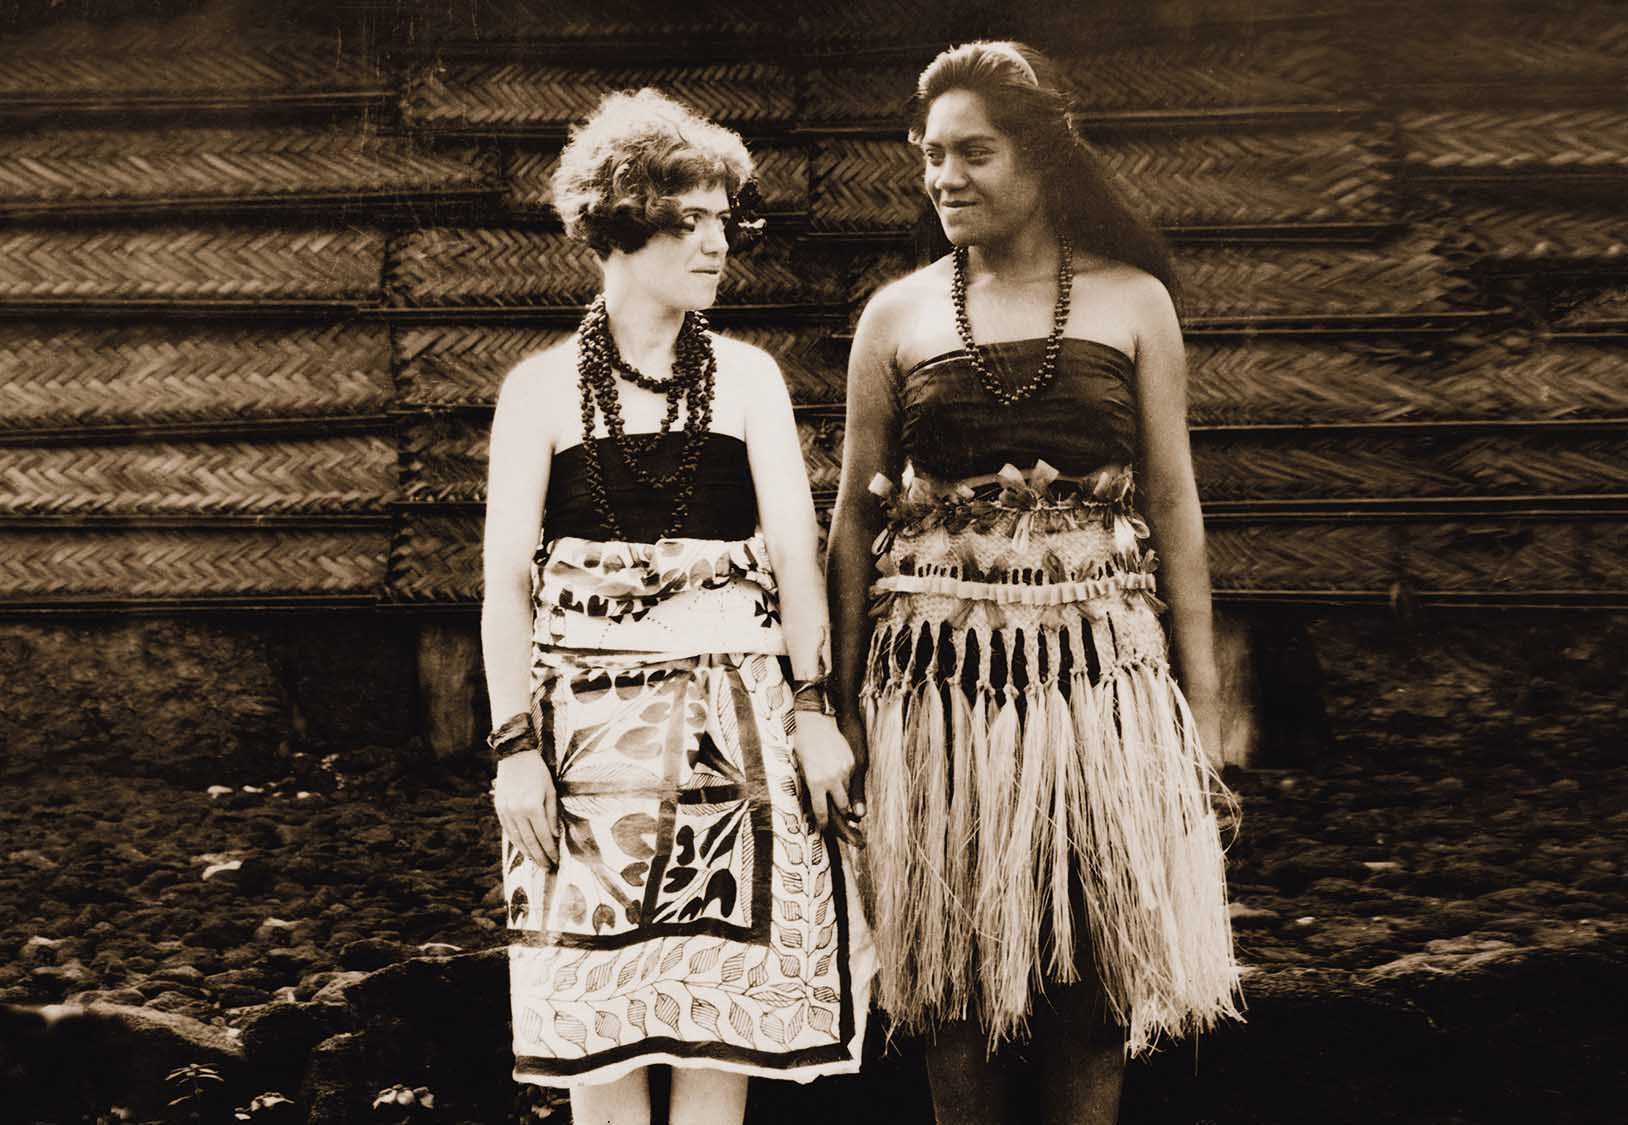 Dr. Margaret Mead in Samoan dress, with Fa'amotu.